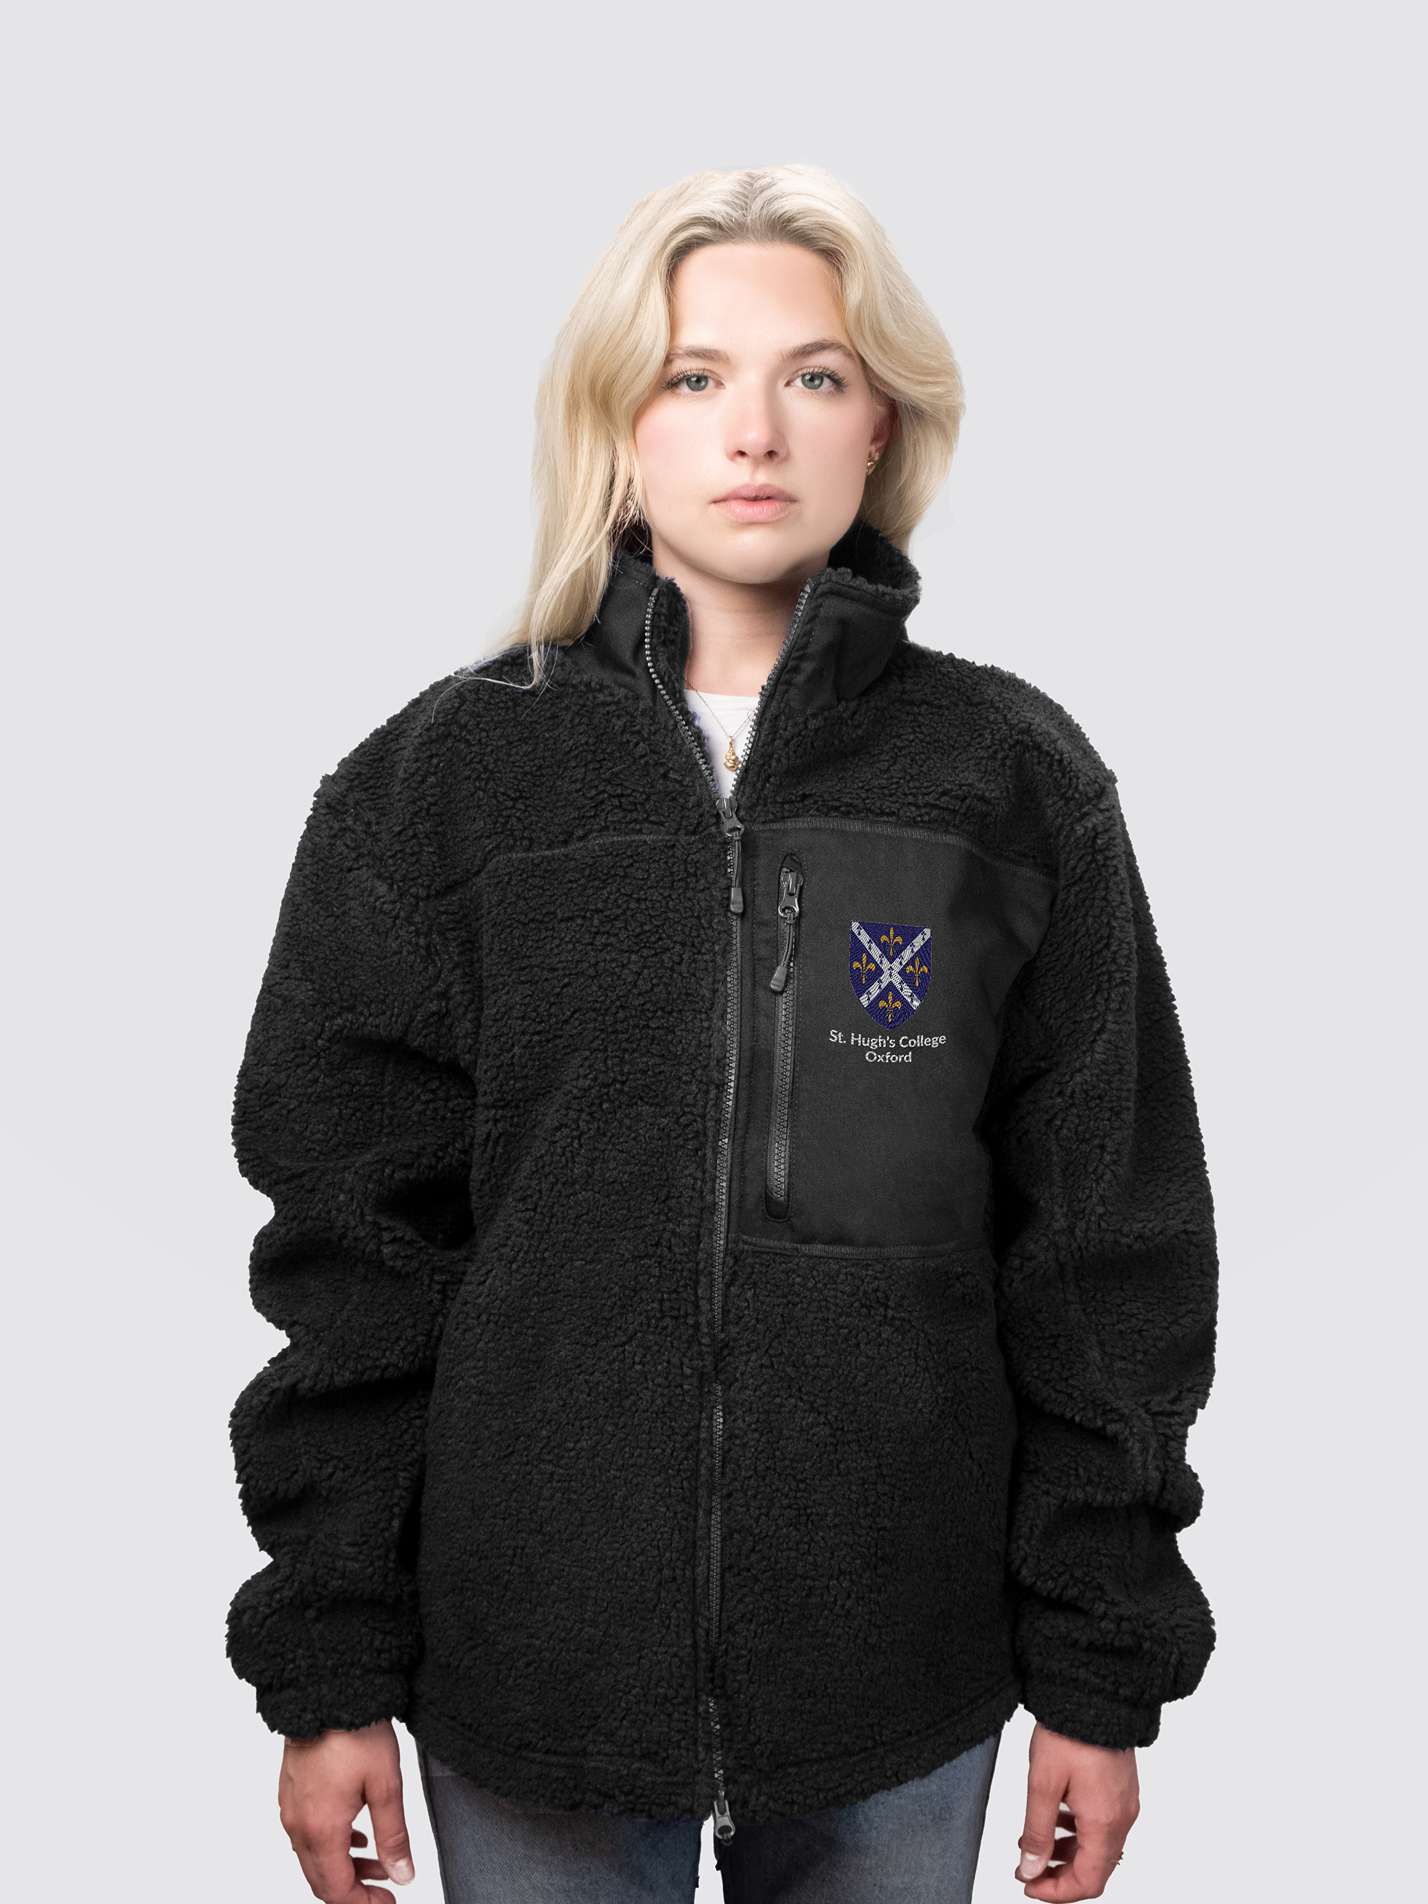 St Hugh's College Oxford Unisex Fluffy Sherpa Fleece Jacket